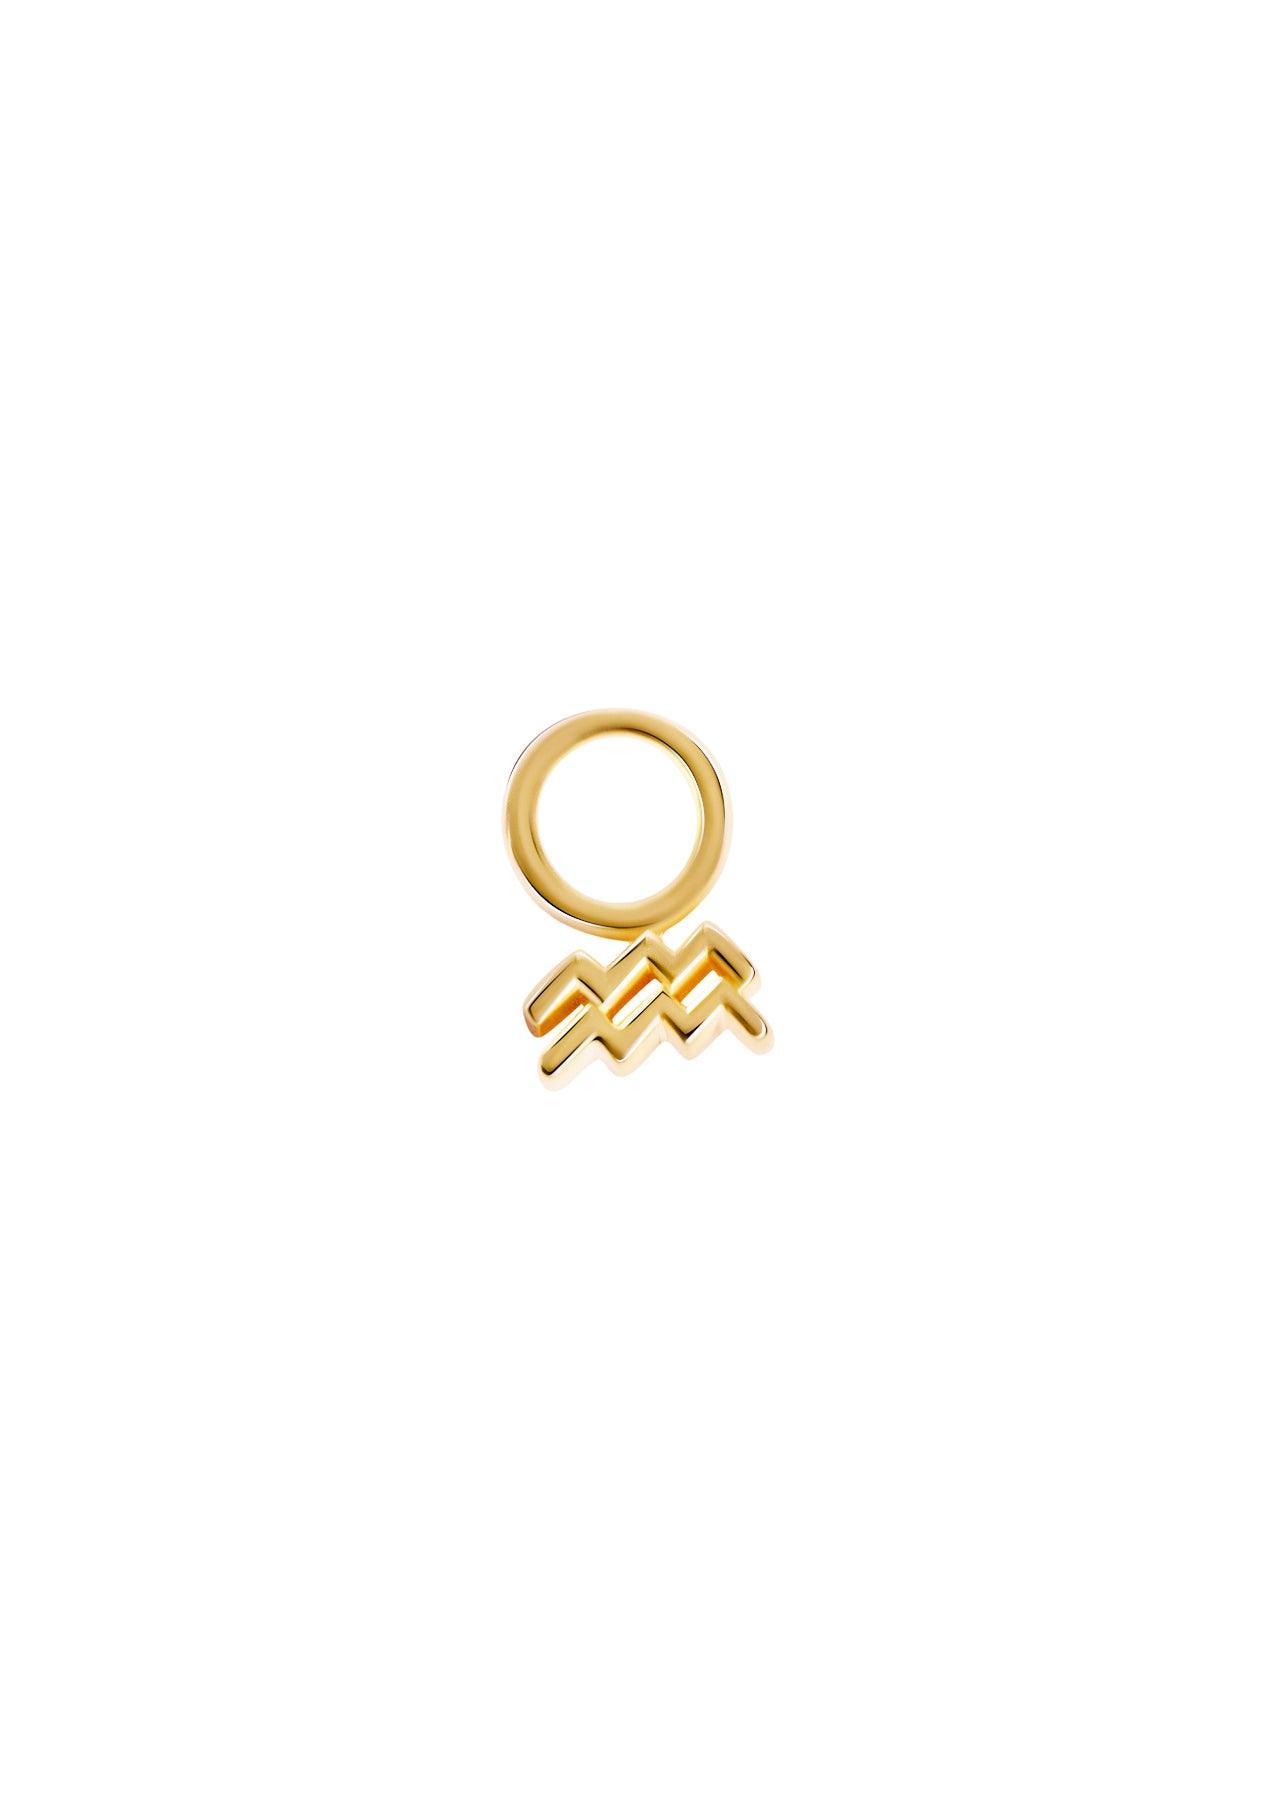 The Gold Zodiac Earring Charm